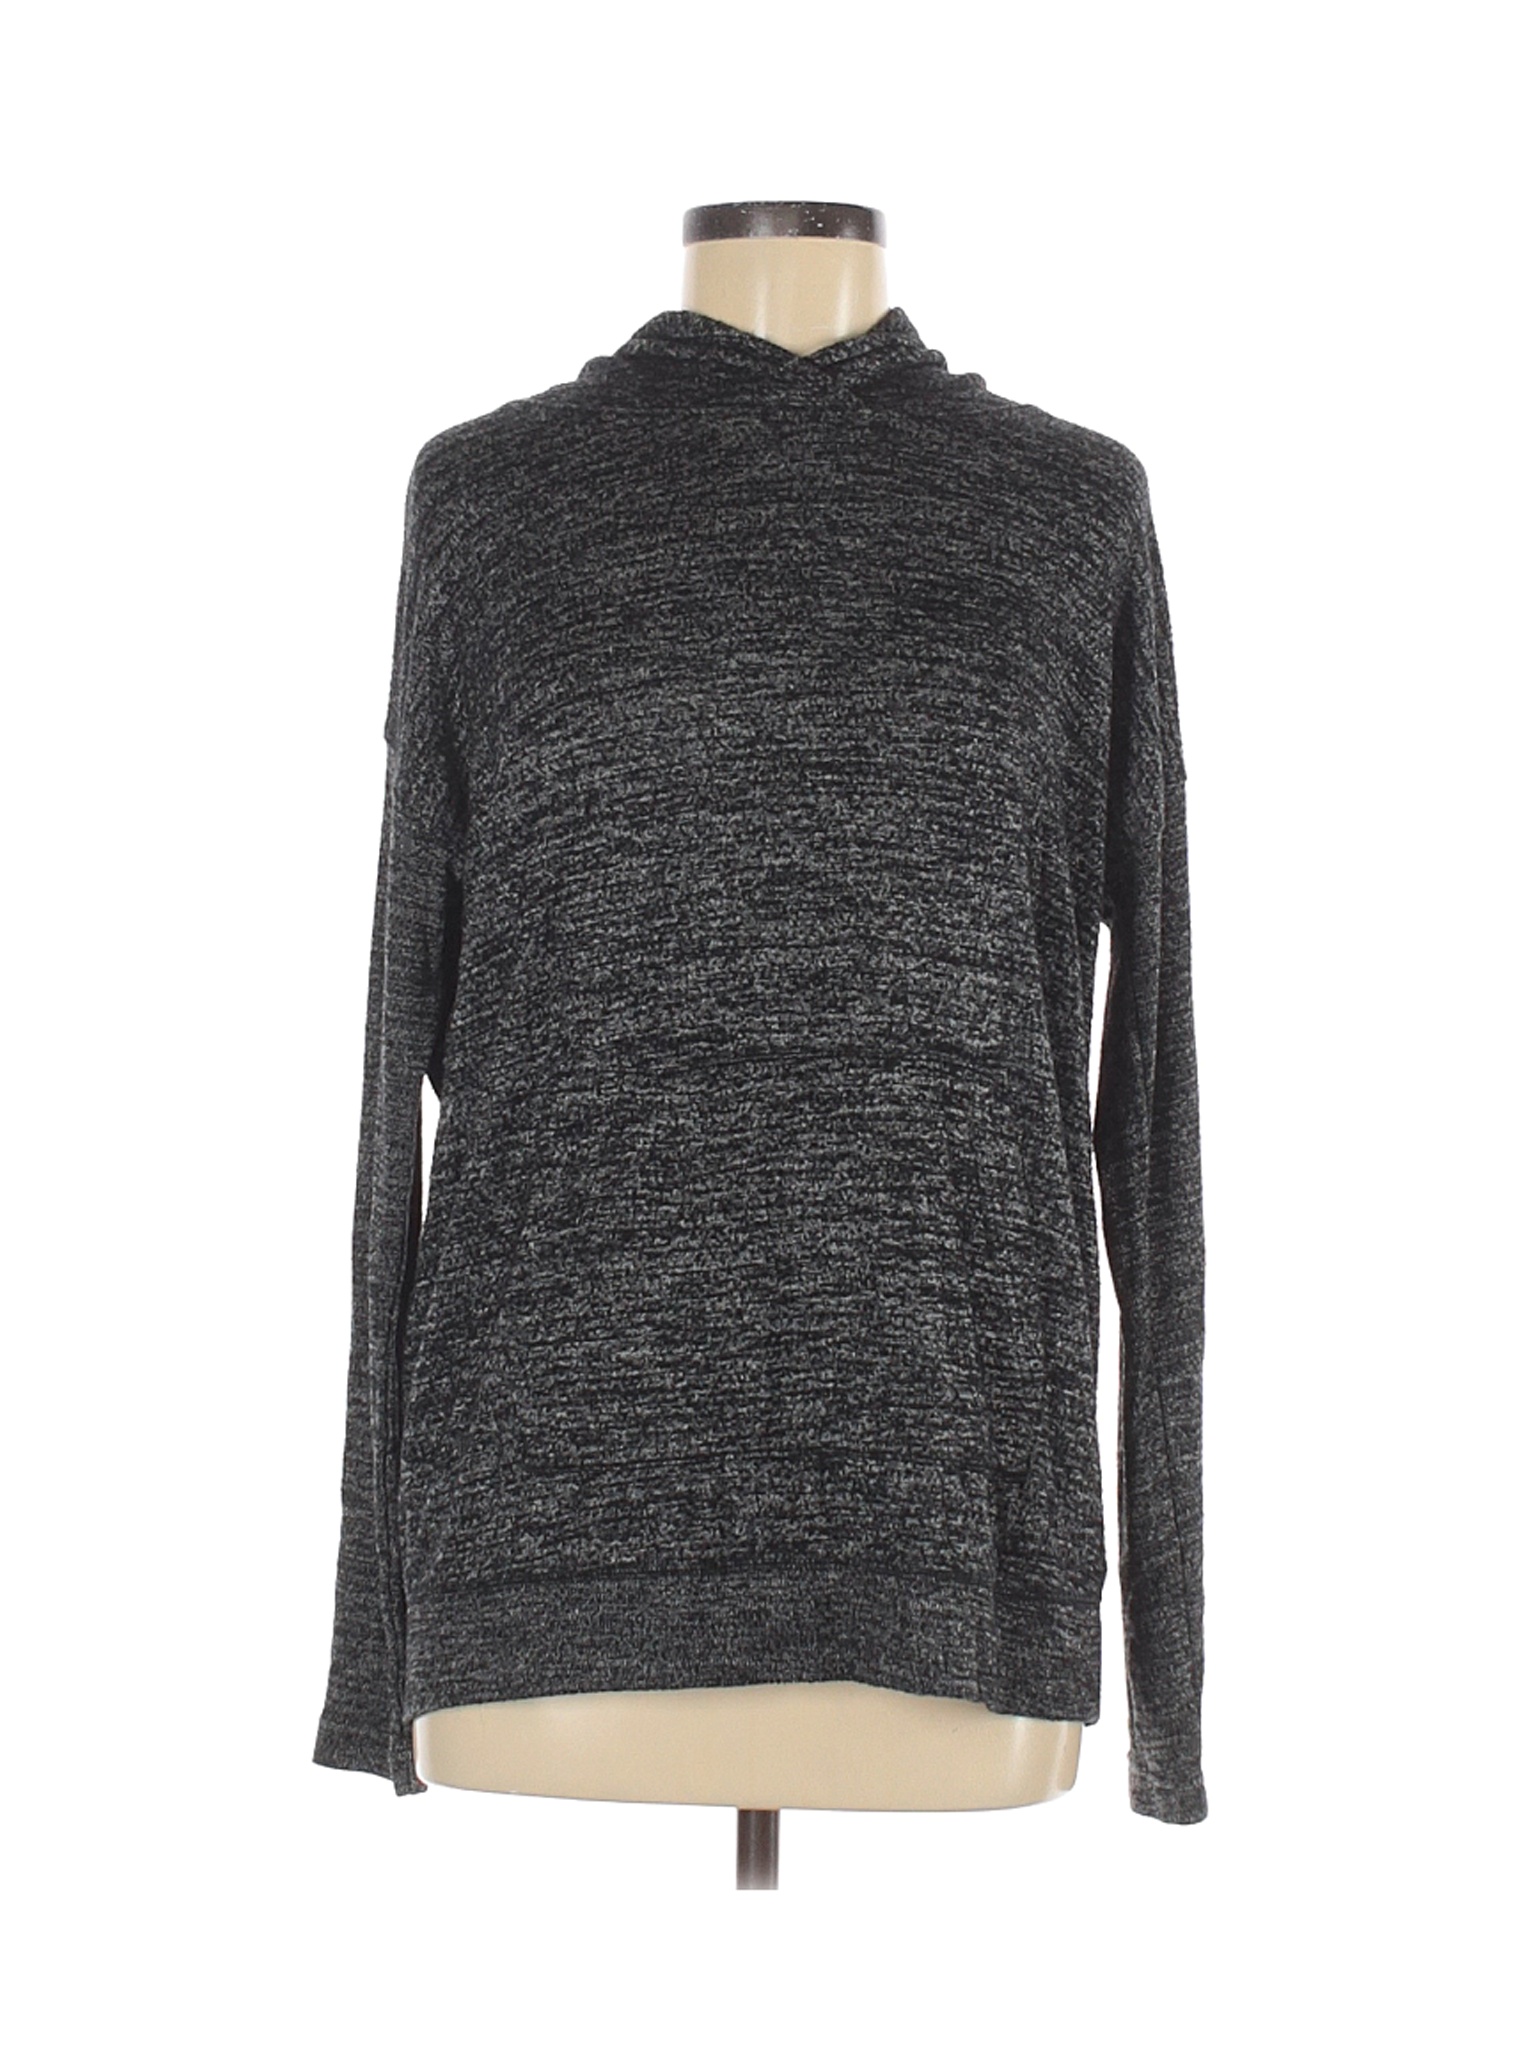 Gap Women Gray Pullover Sweater M | eBay